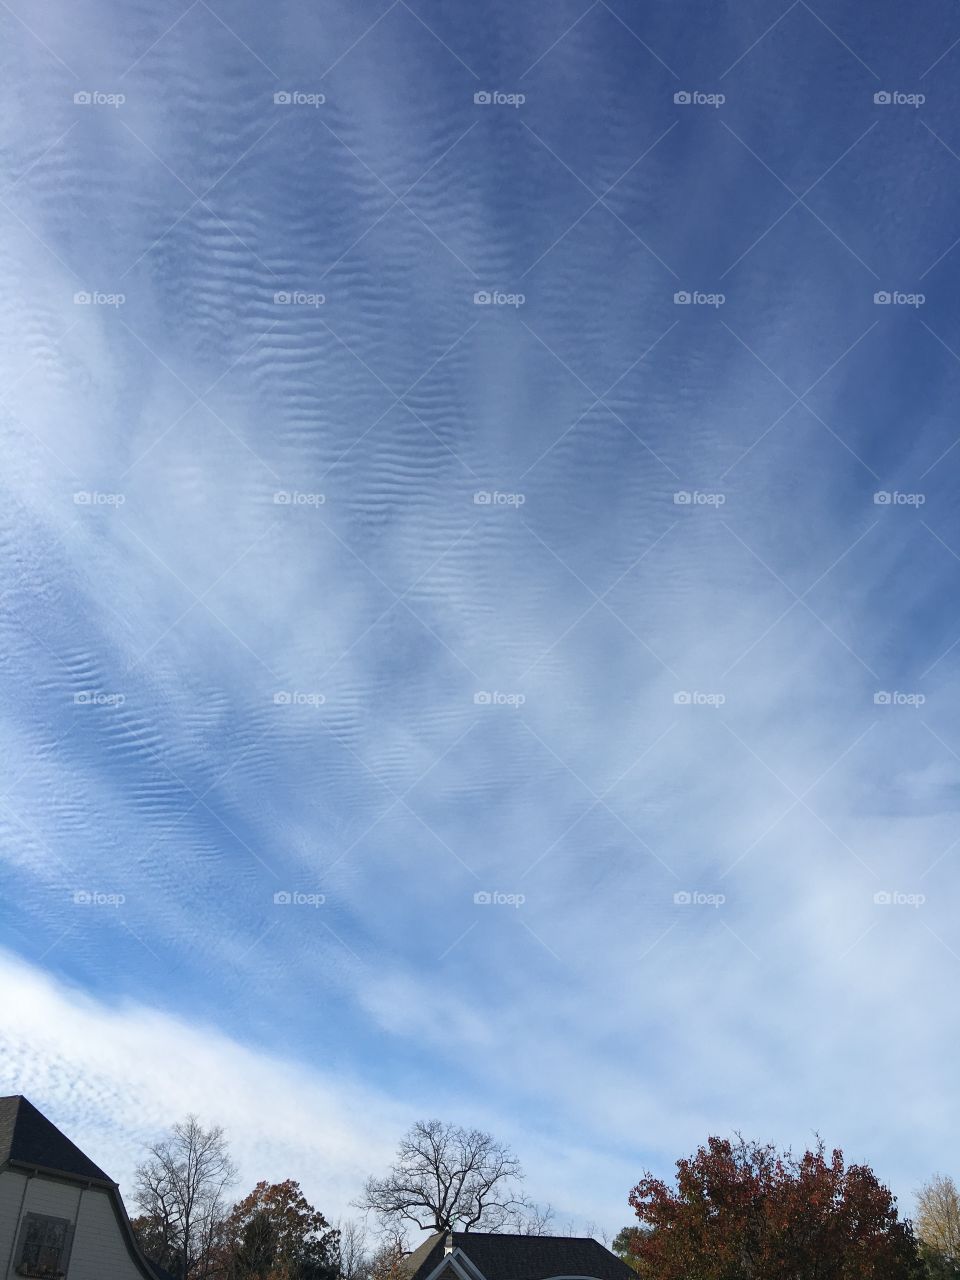 Washboard sky 